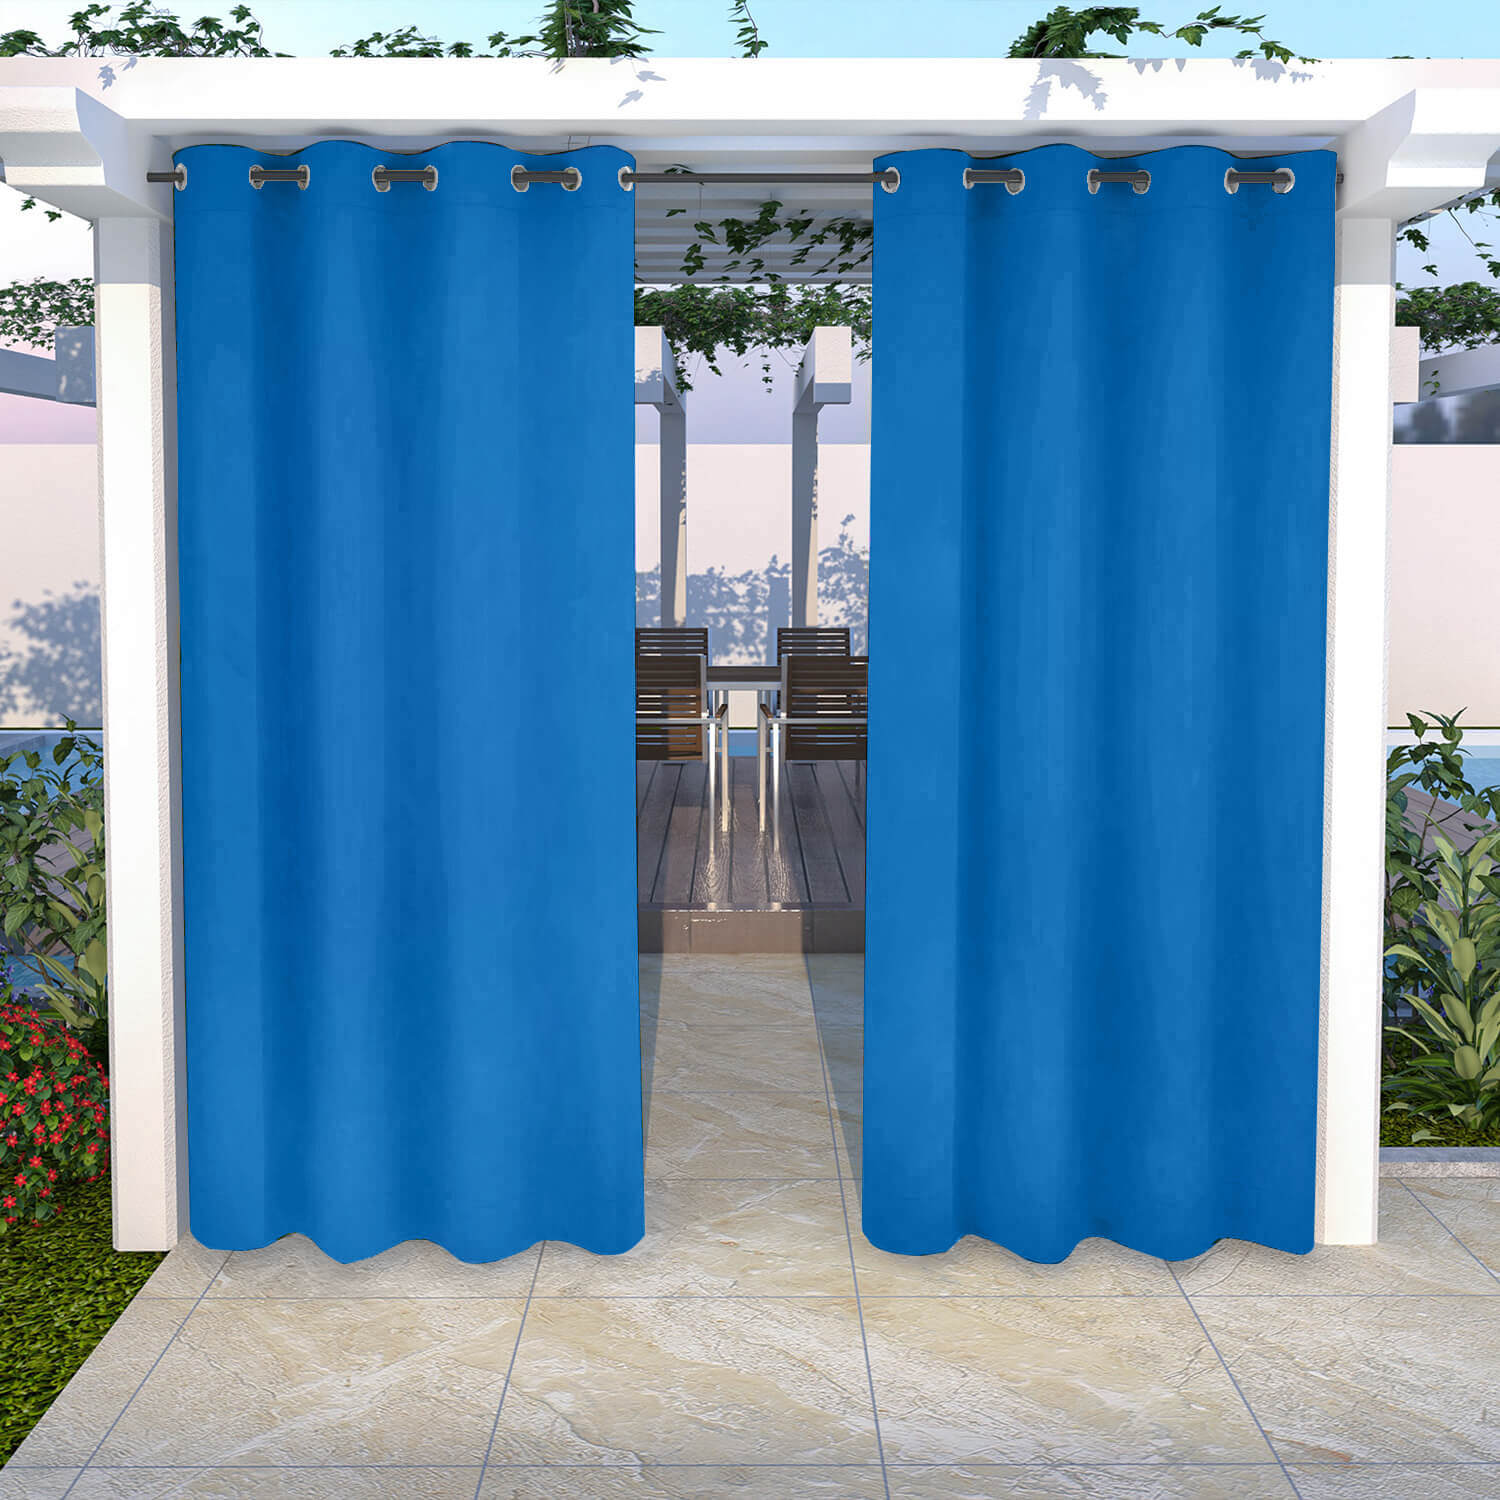 Snowcity Outdoor Curtains Waterproof Grommet Top 1 Panel - Pacific Blue